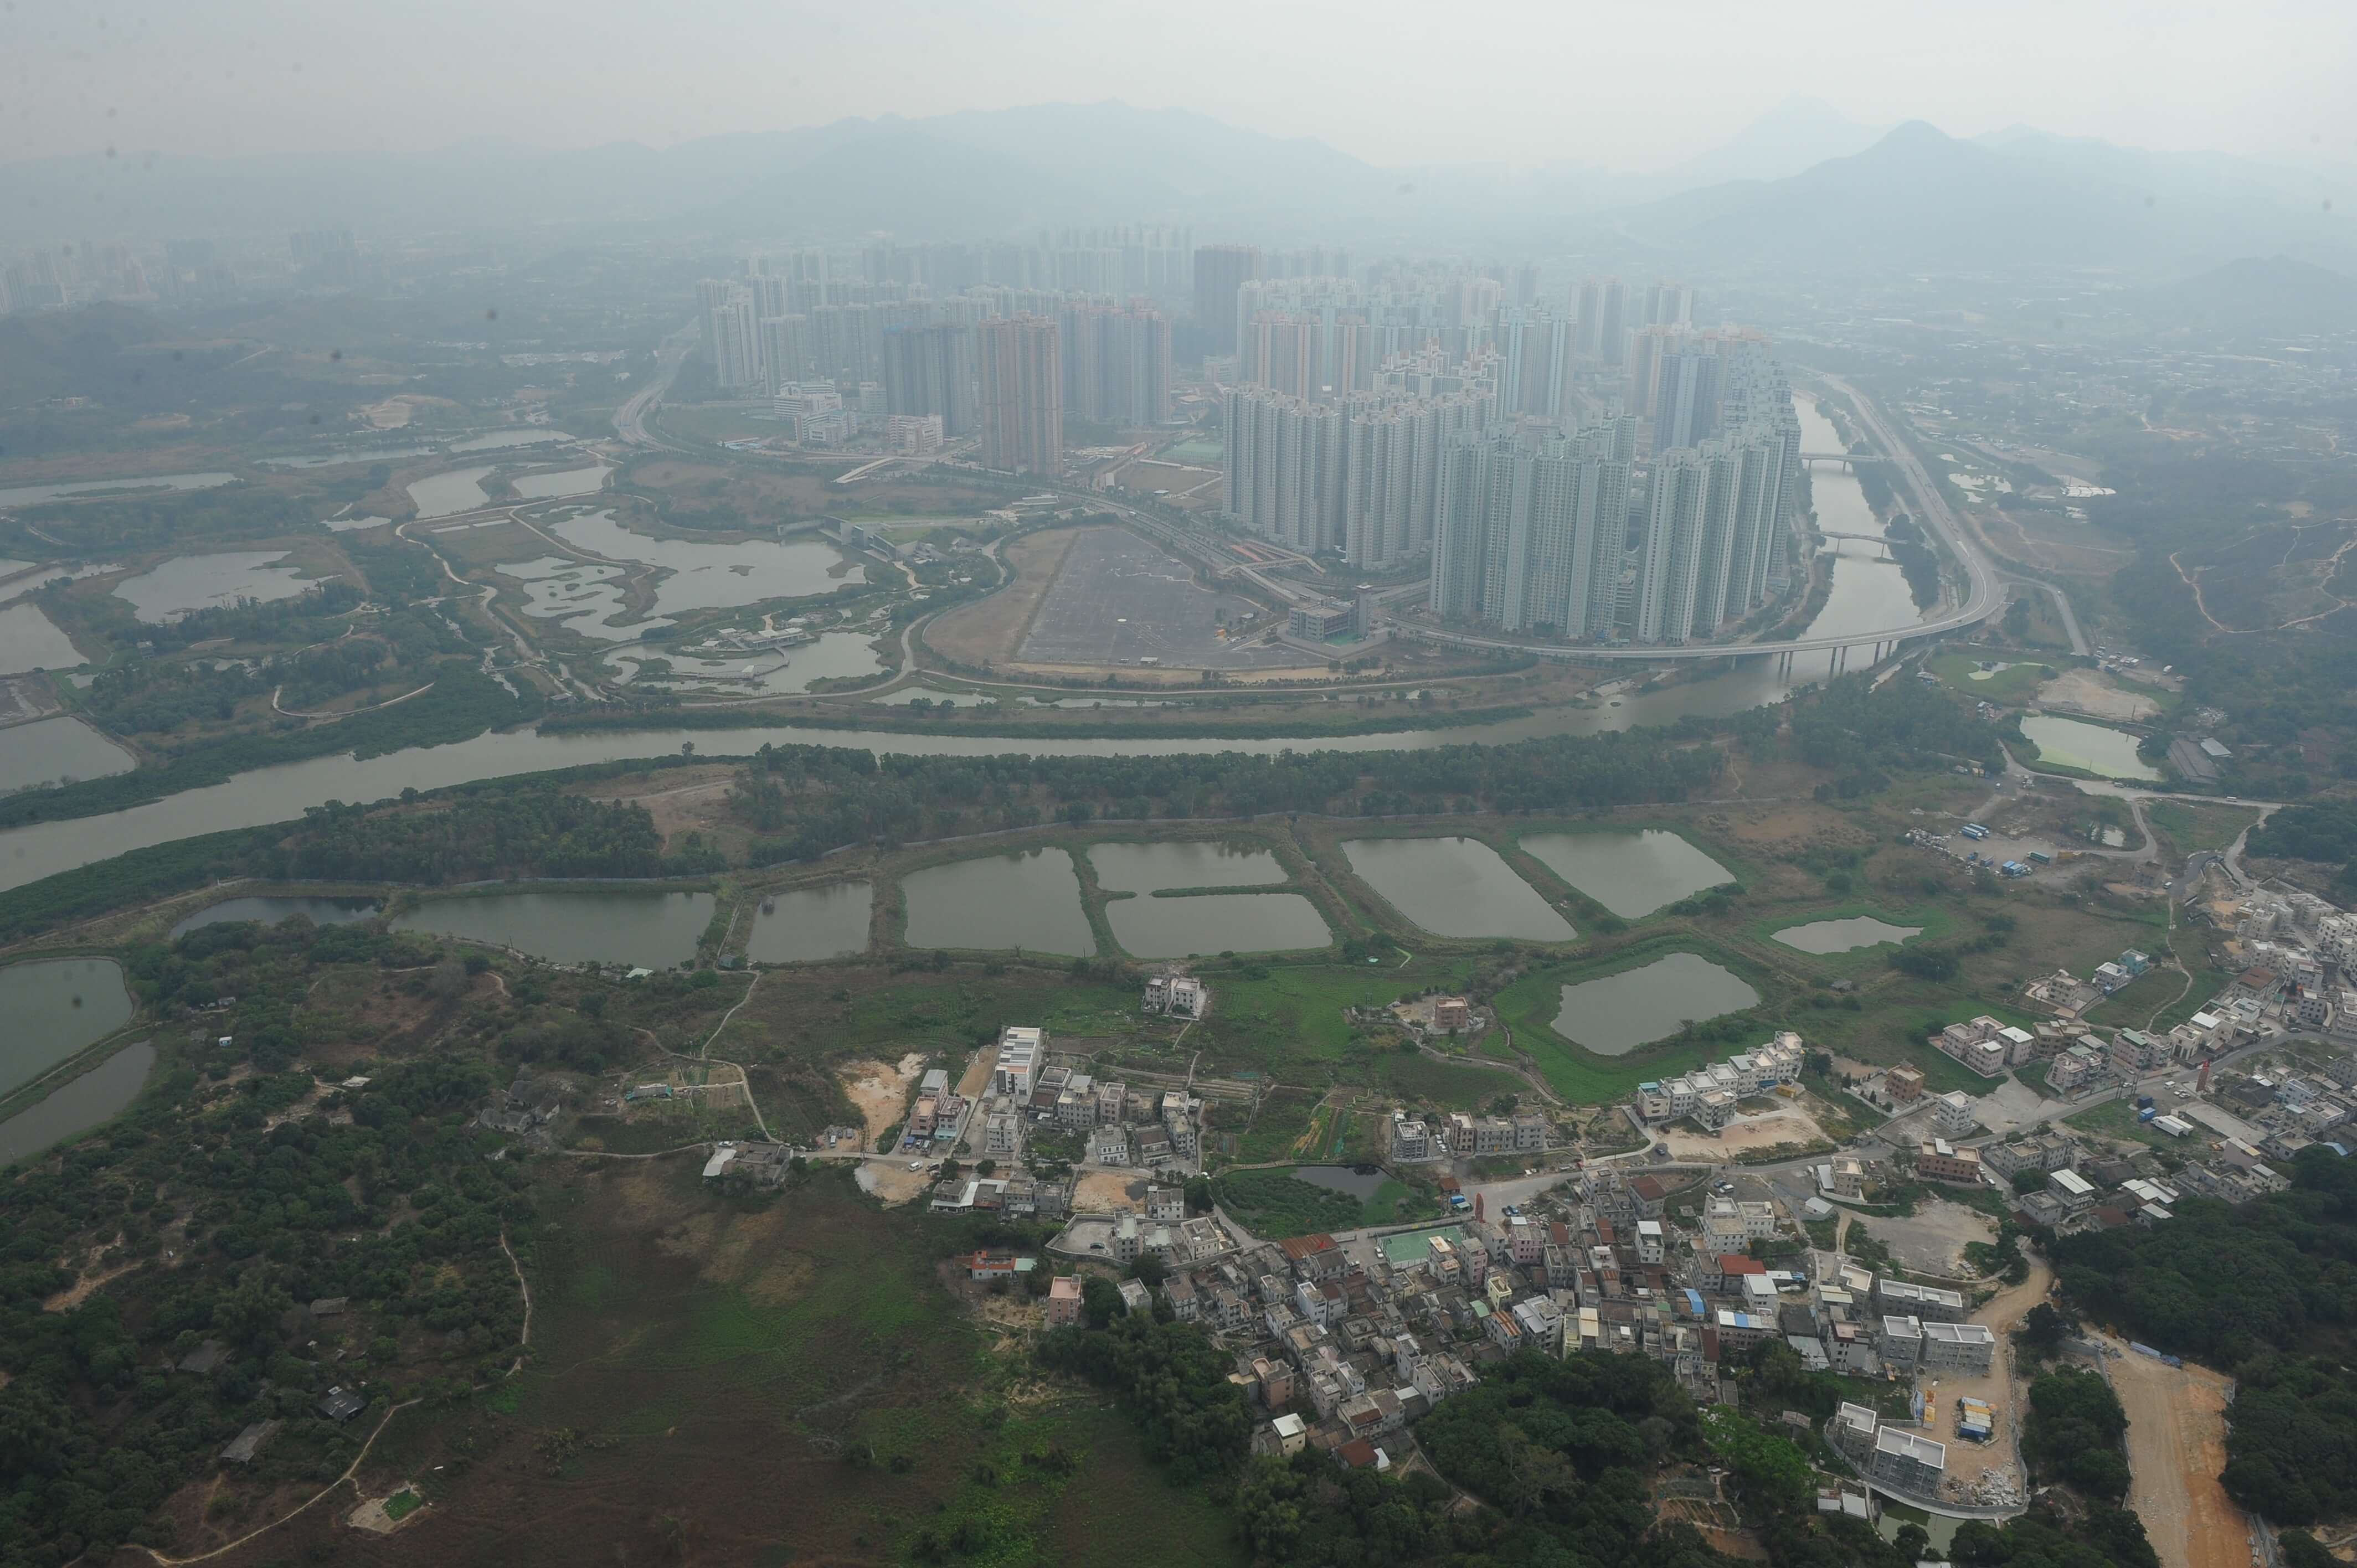 Tin Shui Wai New Town Development in 2005